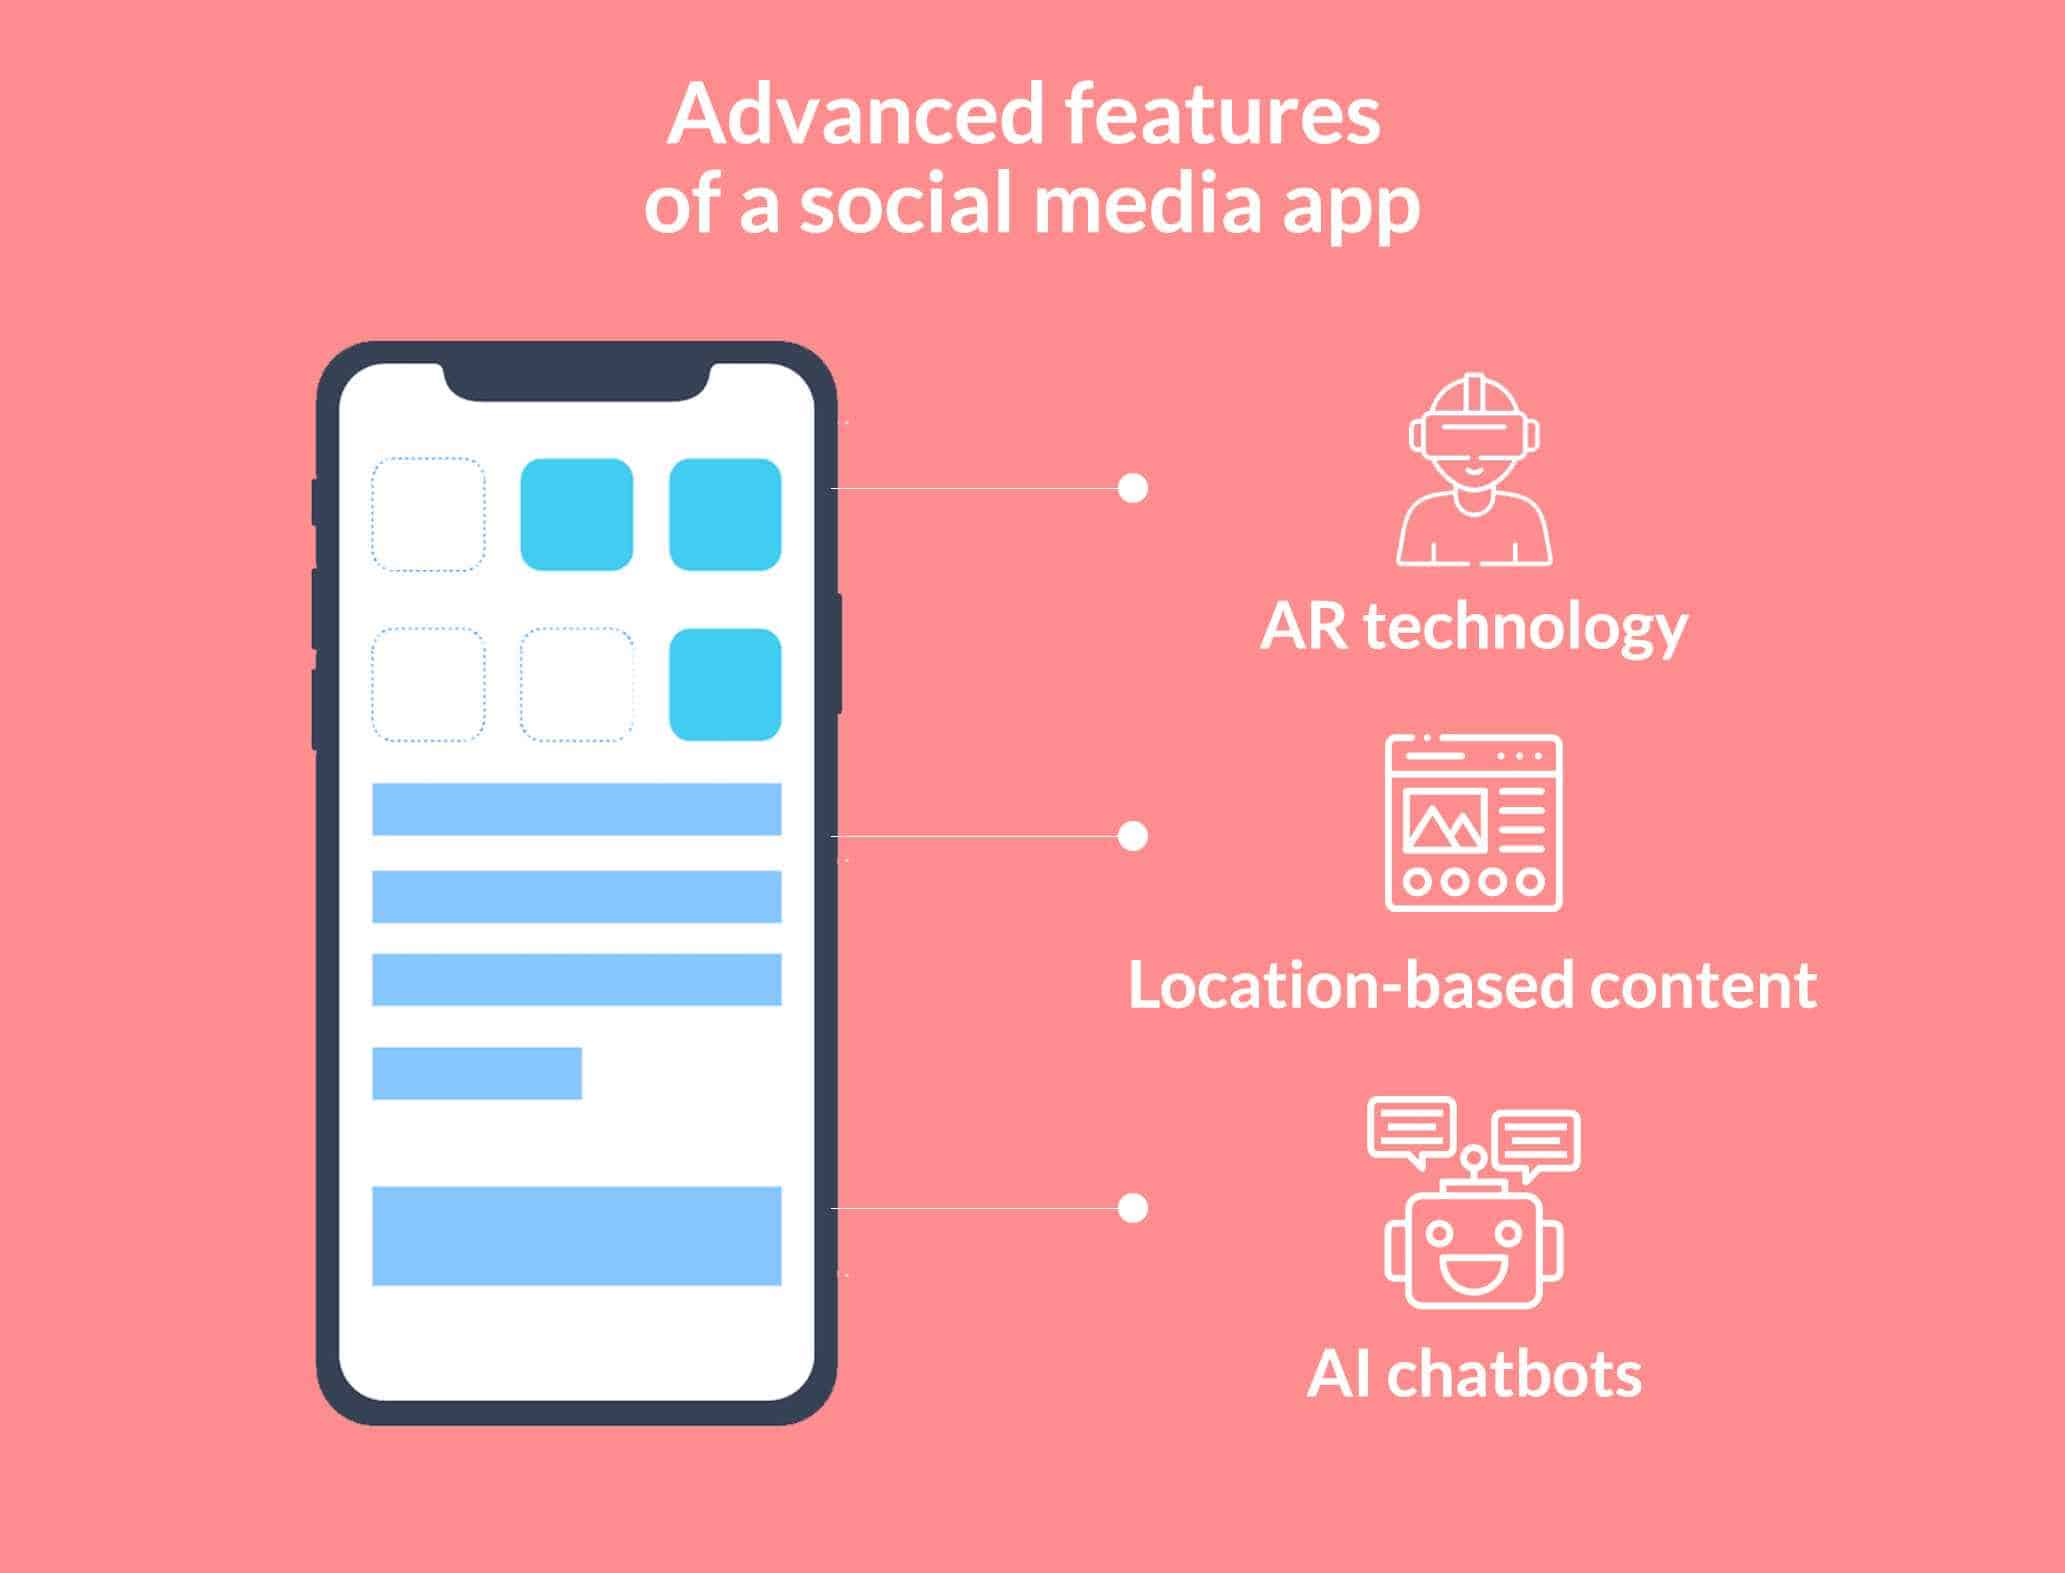 an image describes advanced features of social media app